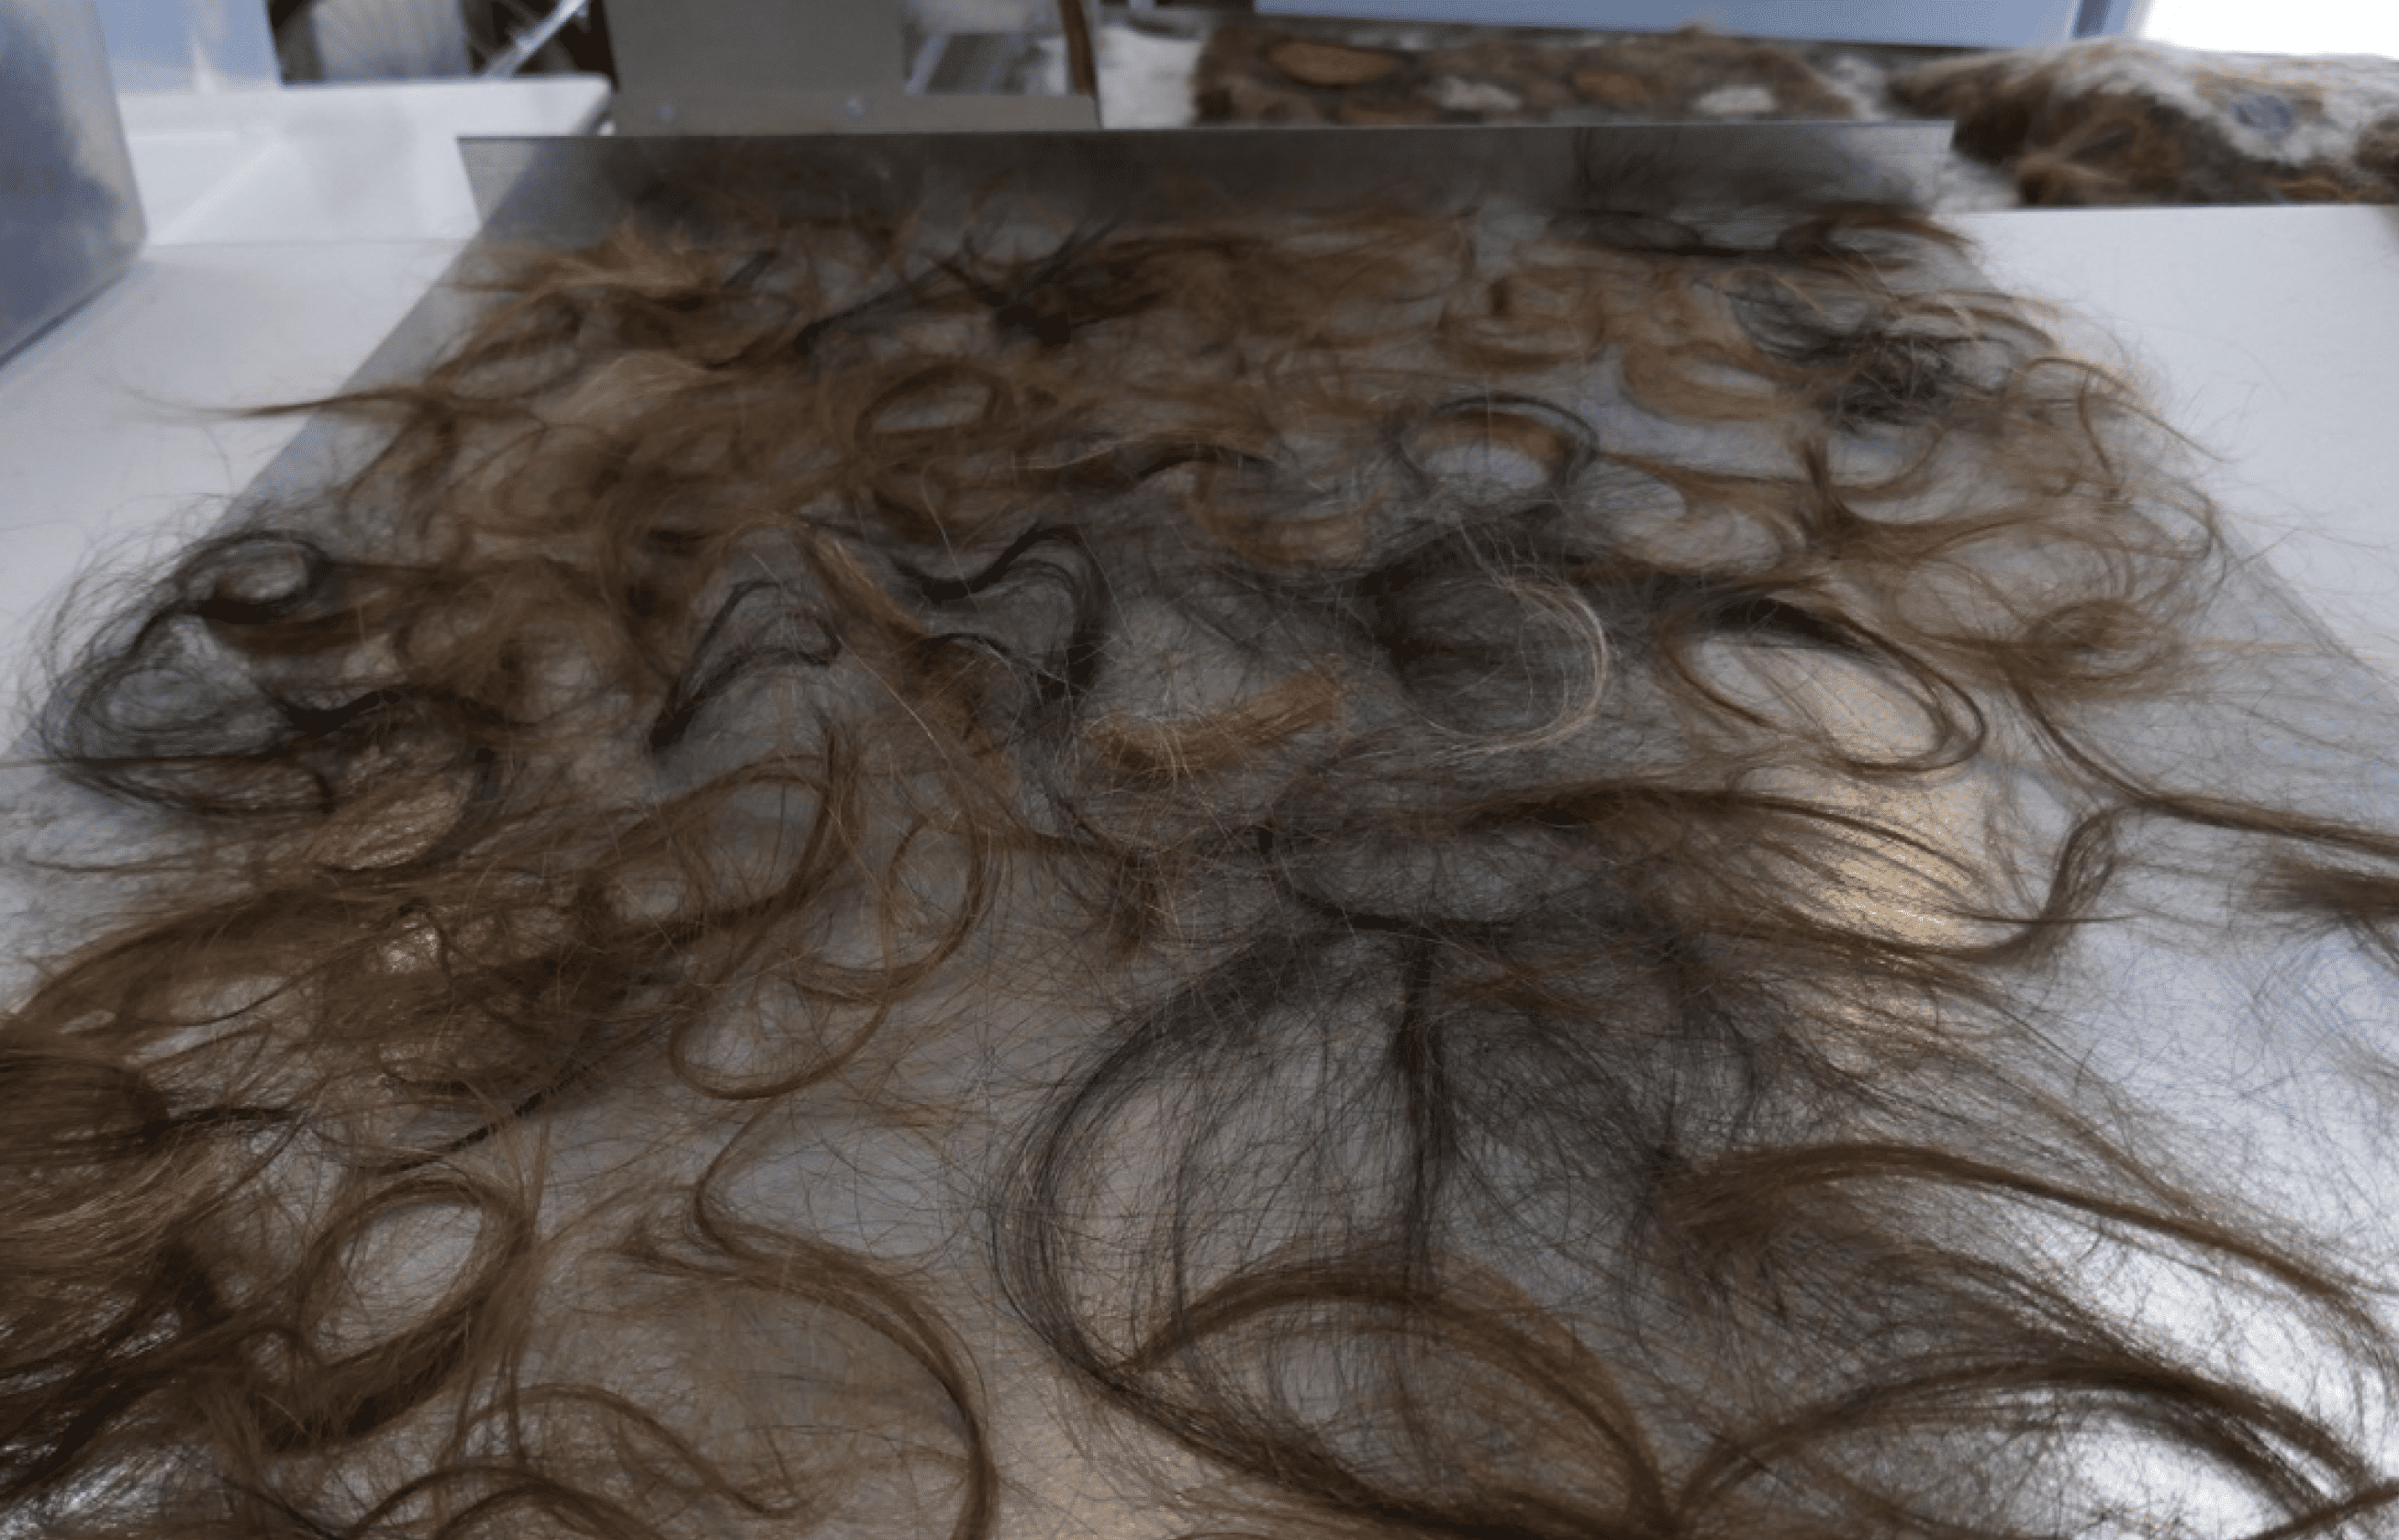 human hair mats